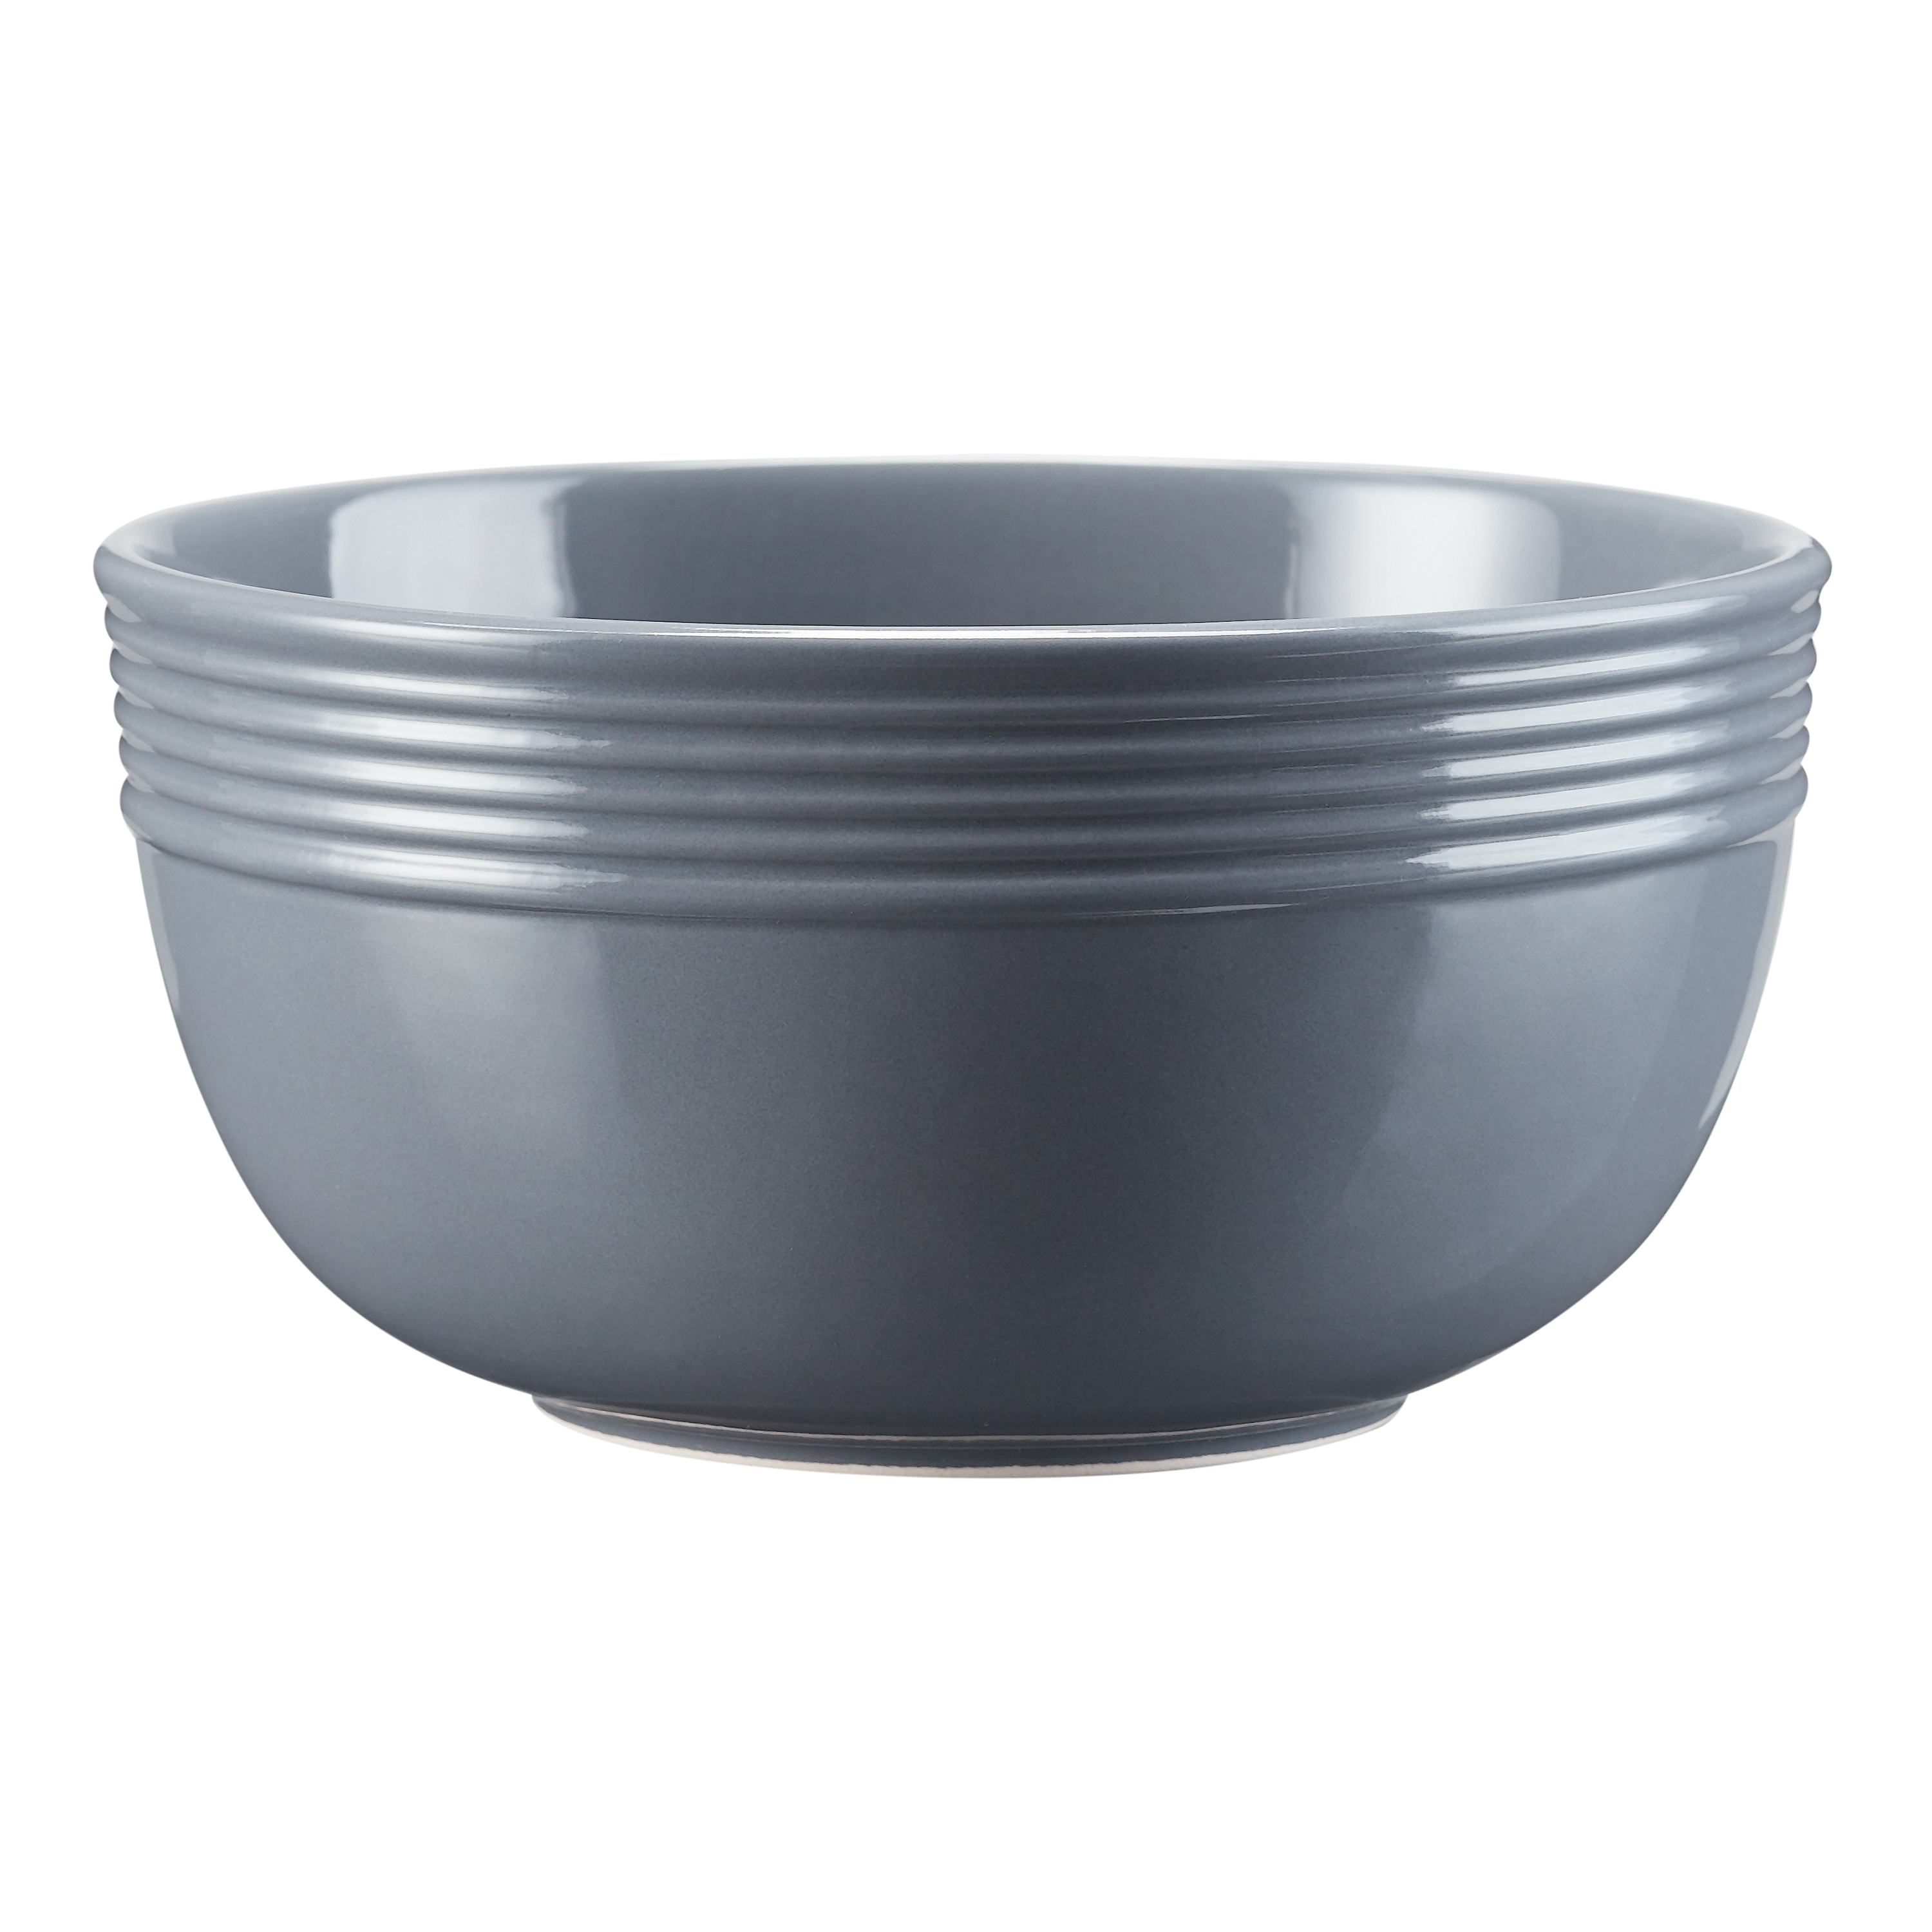 Mainstays Chiara Stoneware Round 6.25" Gray Bowl - image 1 of 5